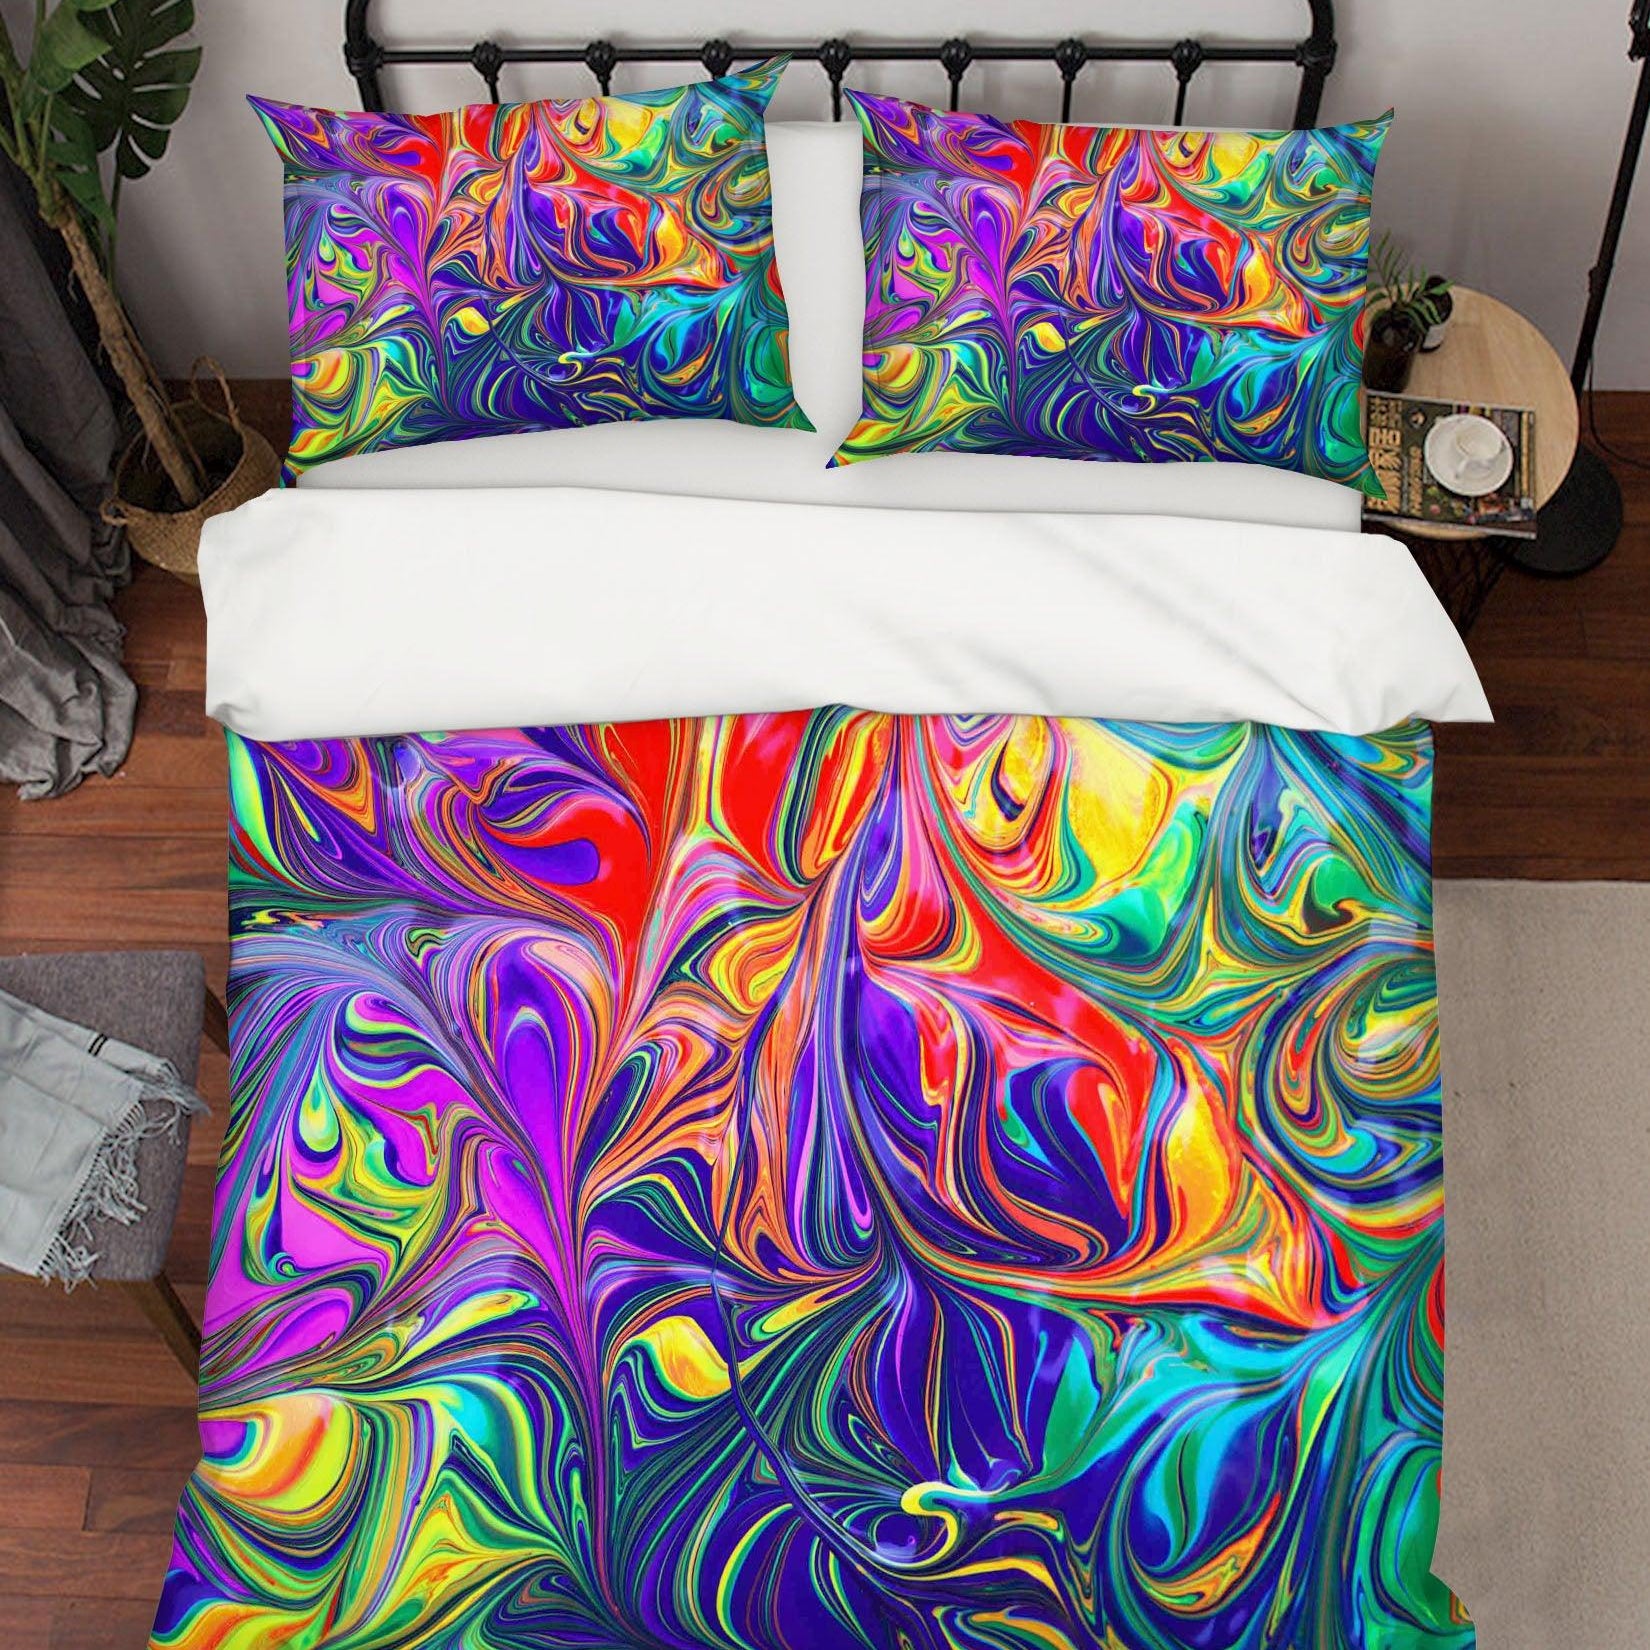 3D Abstract Color Pattern Quilt Cover Set Bedding Set Duvet Cover Pillowcases LQH A160- Jess Art Decoration